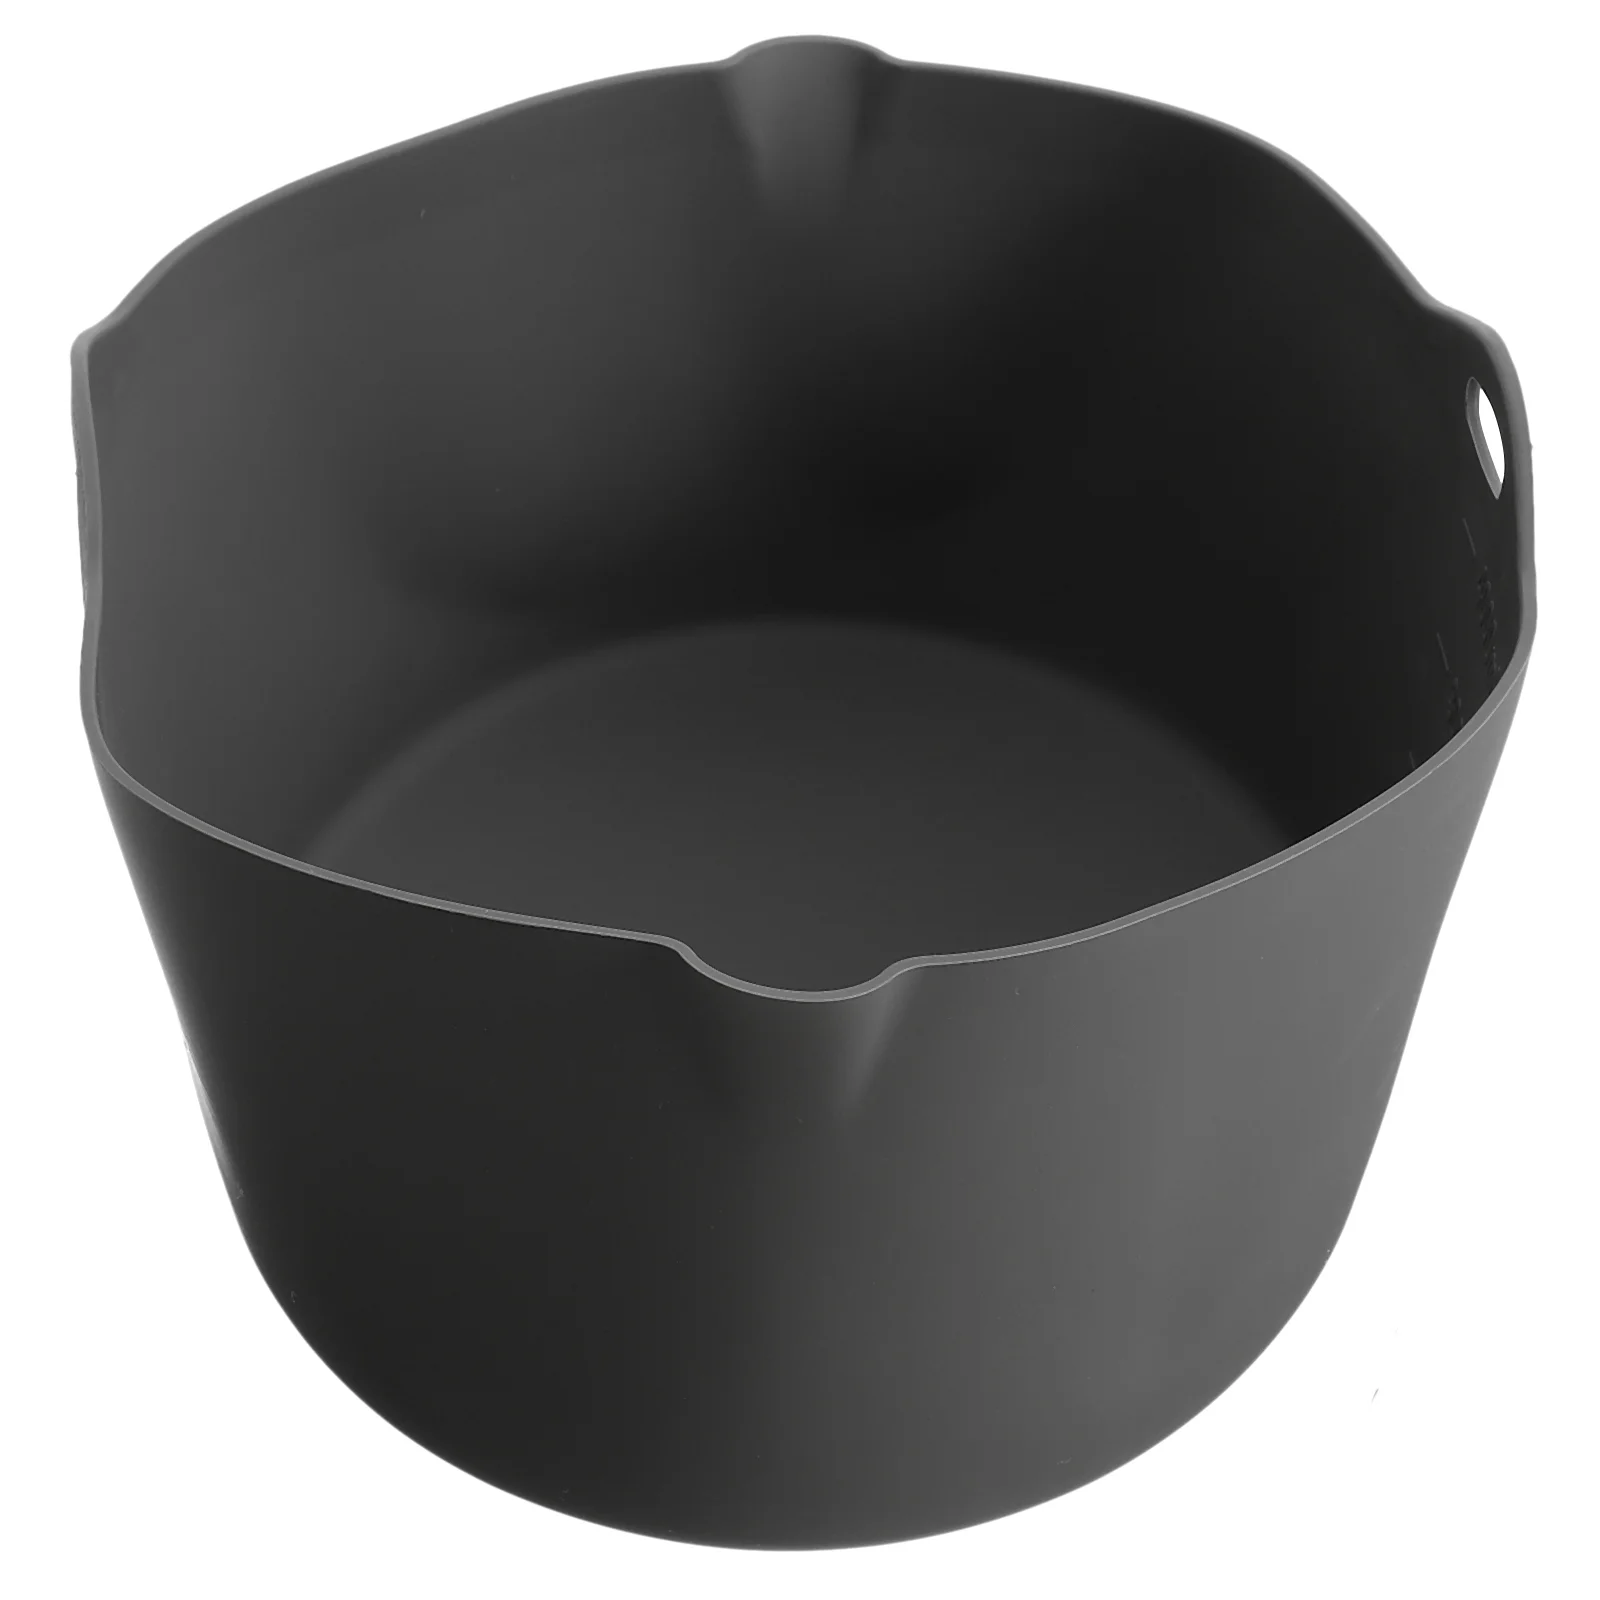 

Multi-function Heat-resist Reusable Silicone Slow Cooker Pot Liner Slow Cooker Lining Bowl Slow Cooker Divider Cooker Insert